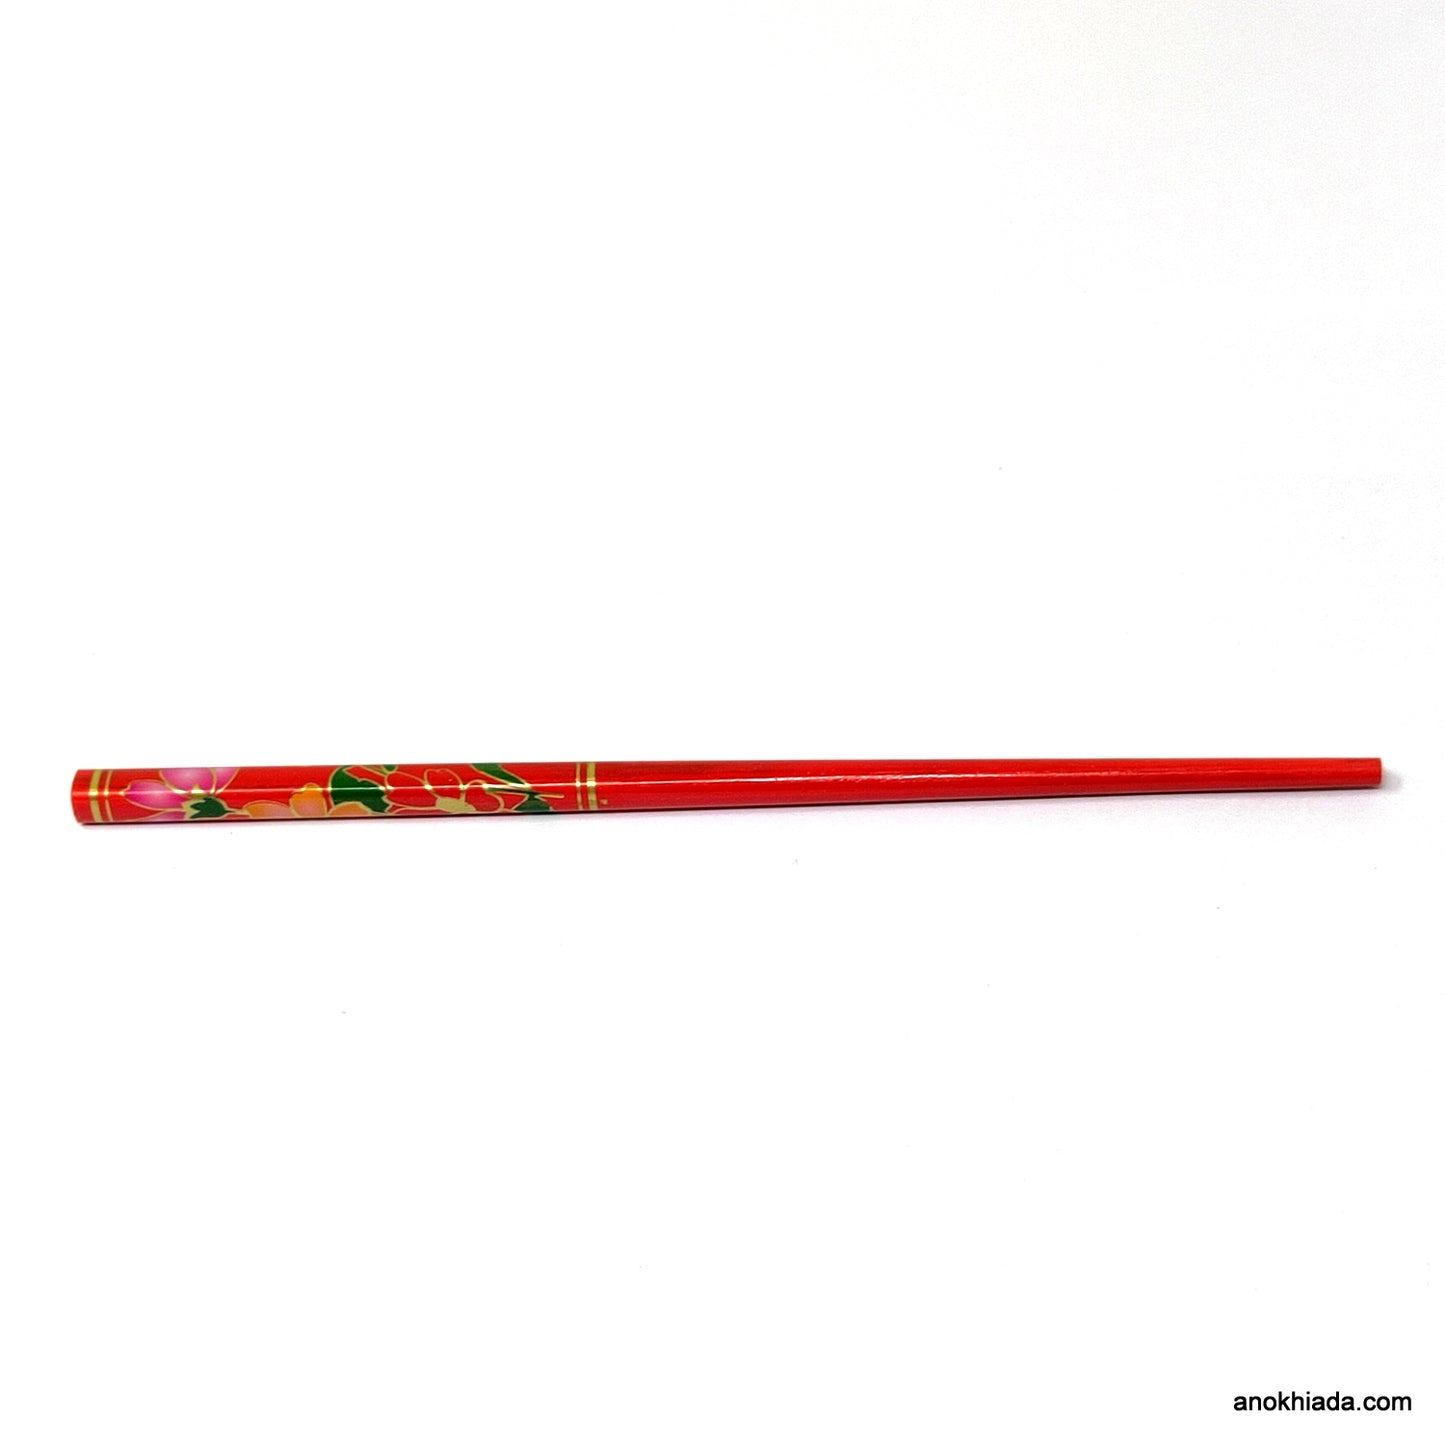 Anokhi Ada Flower Print Red Wooden Juda Stick/Bun Stick - (99-07A Juda Stick)